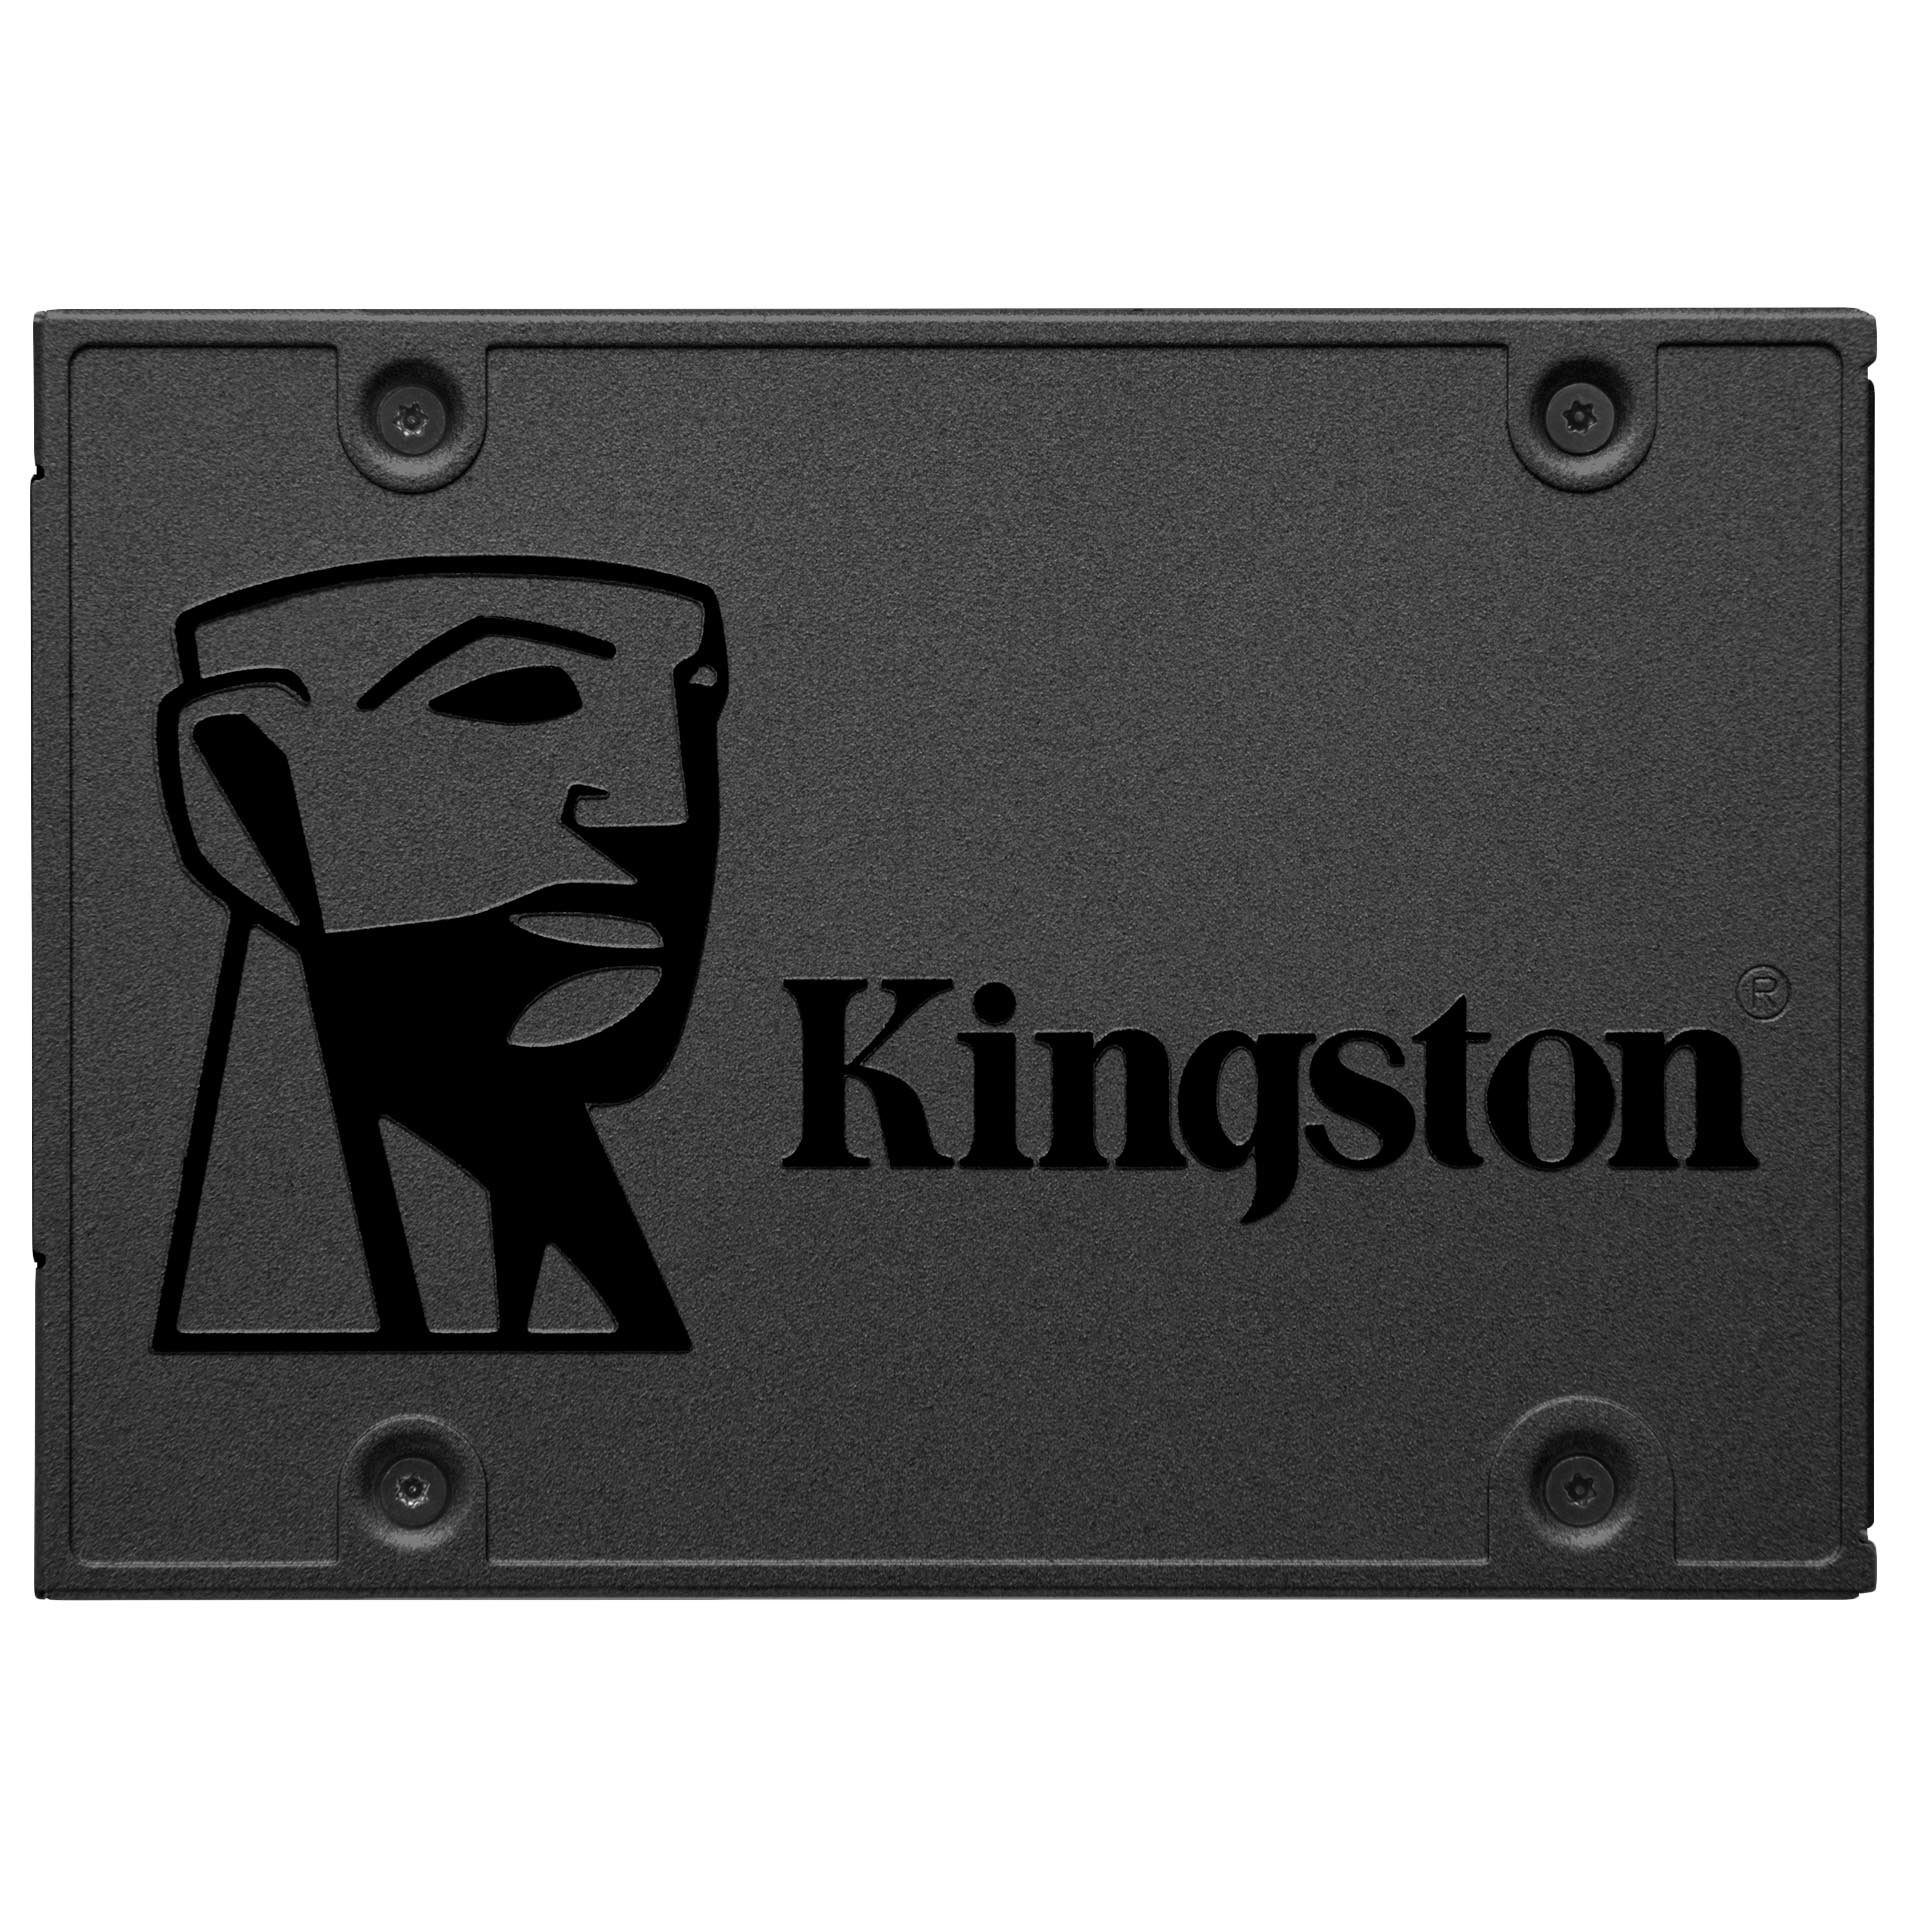 Внутренний твердотельный накопитель Kingston A400, SA400S37/480G, 480Гб, 2,5 твердотельный накопитель kingston a400 480gb sa400s37 480g